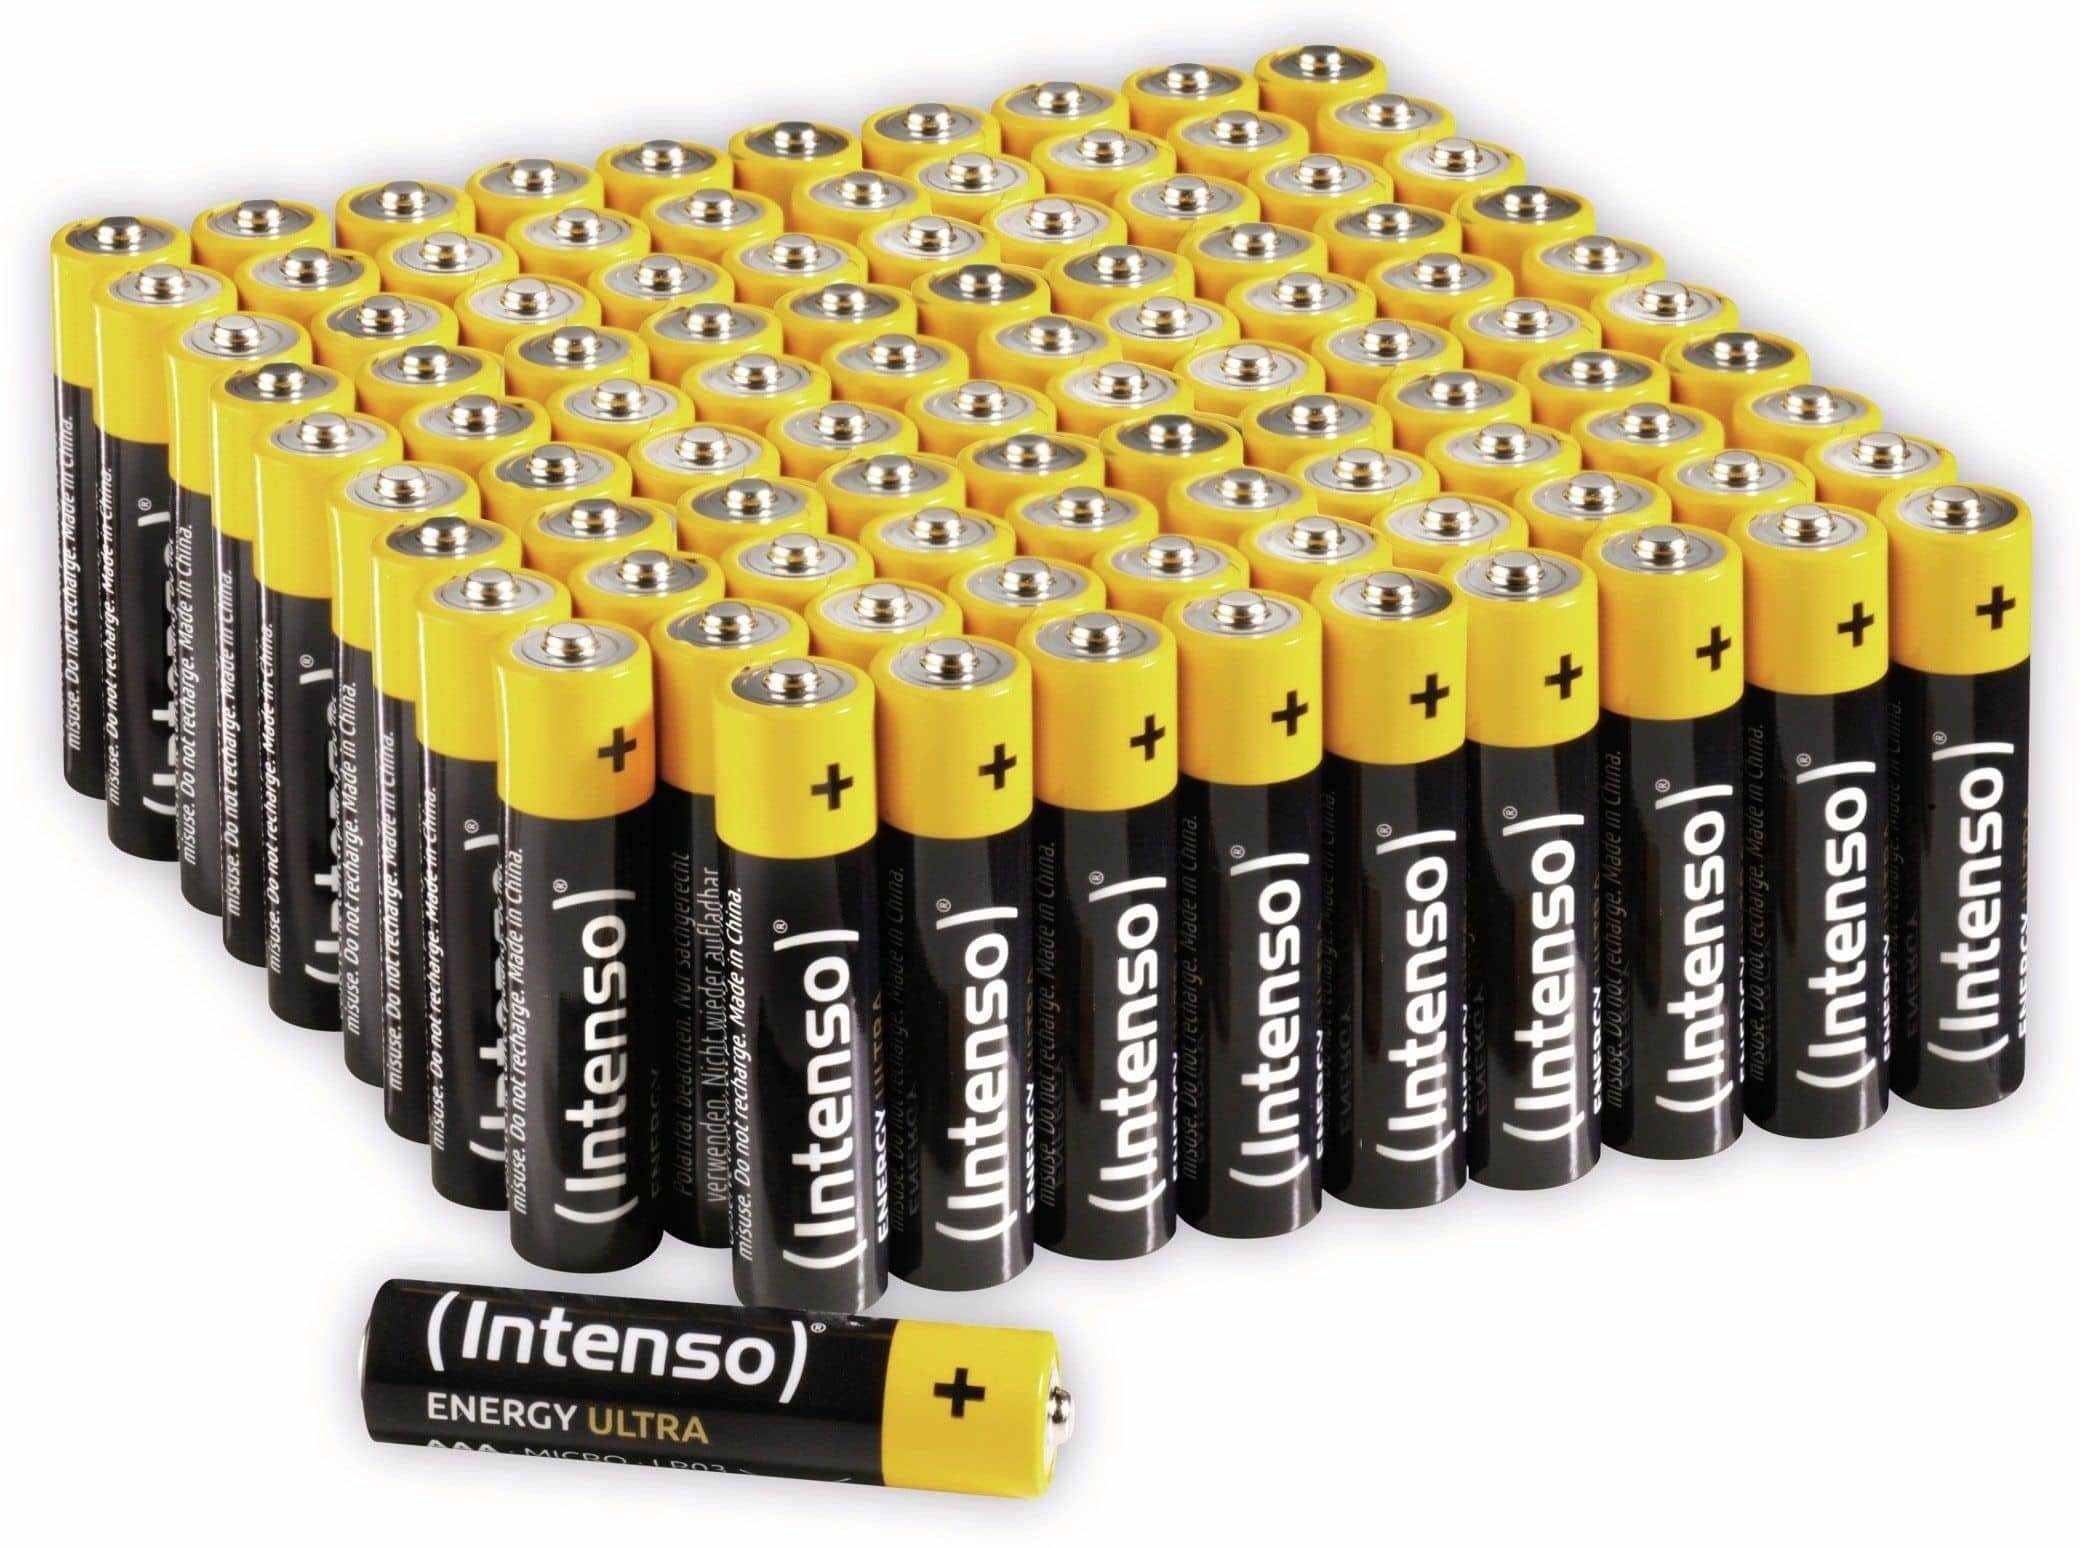 Intenso INTENSO Micro-Batterie Energy Ultra, AAA LR03, 100 Batterie